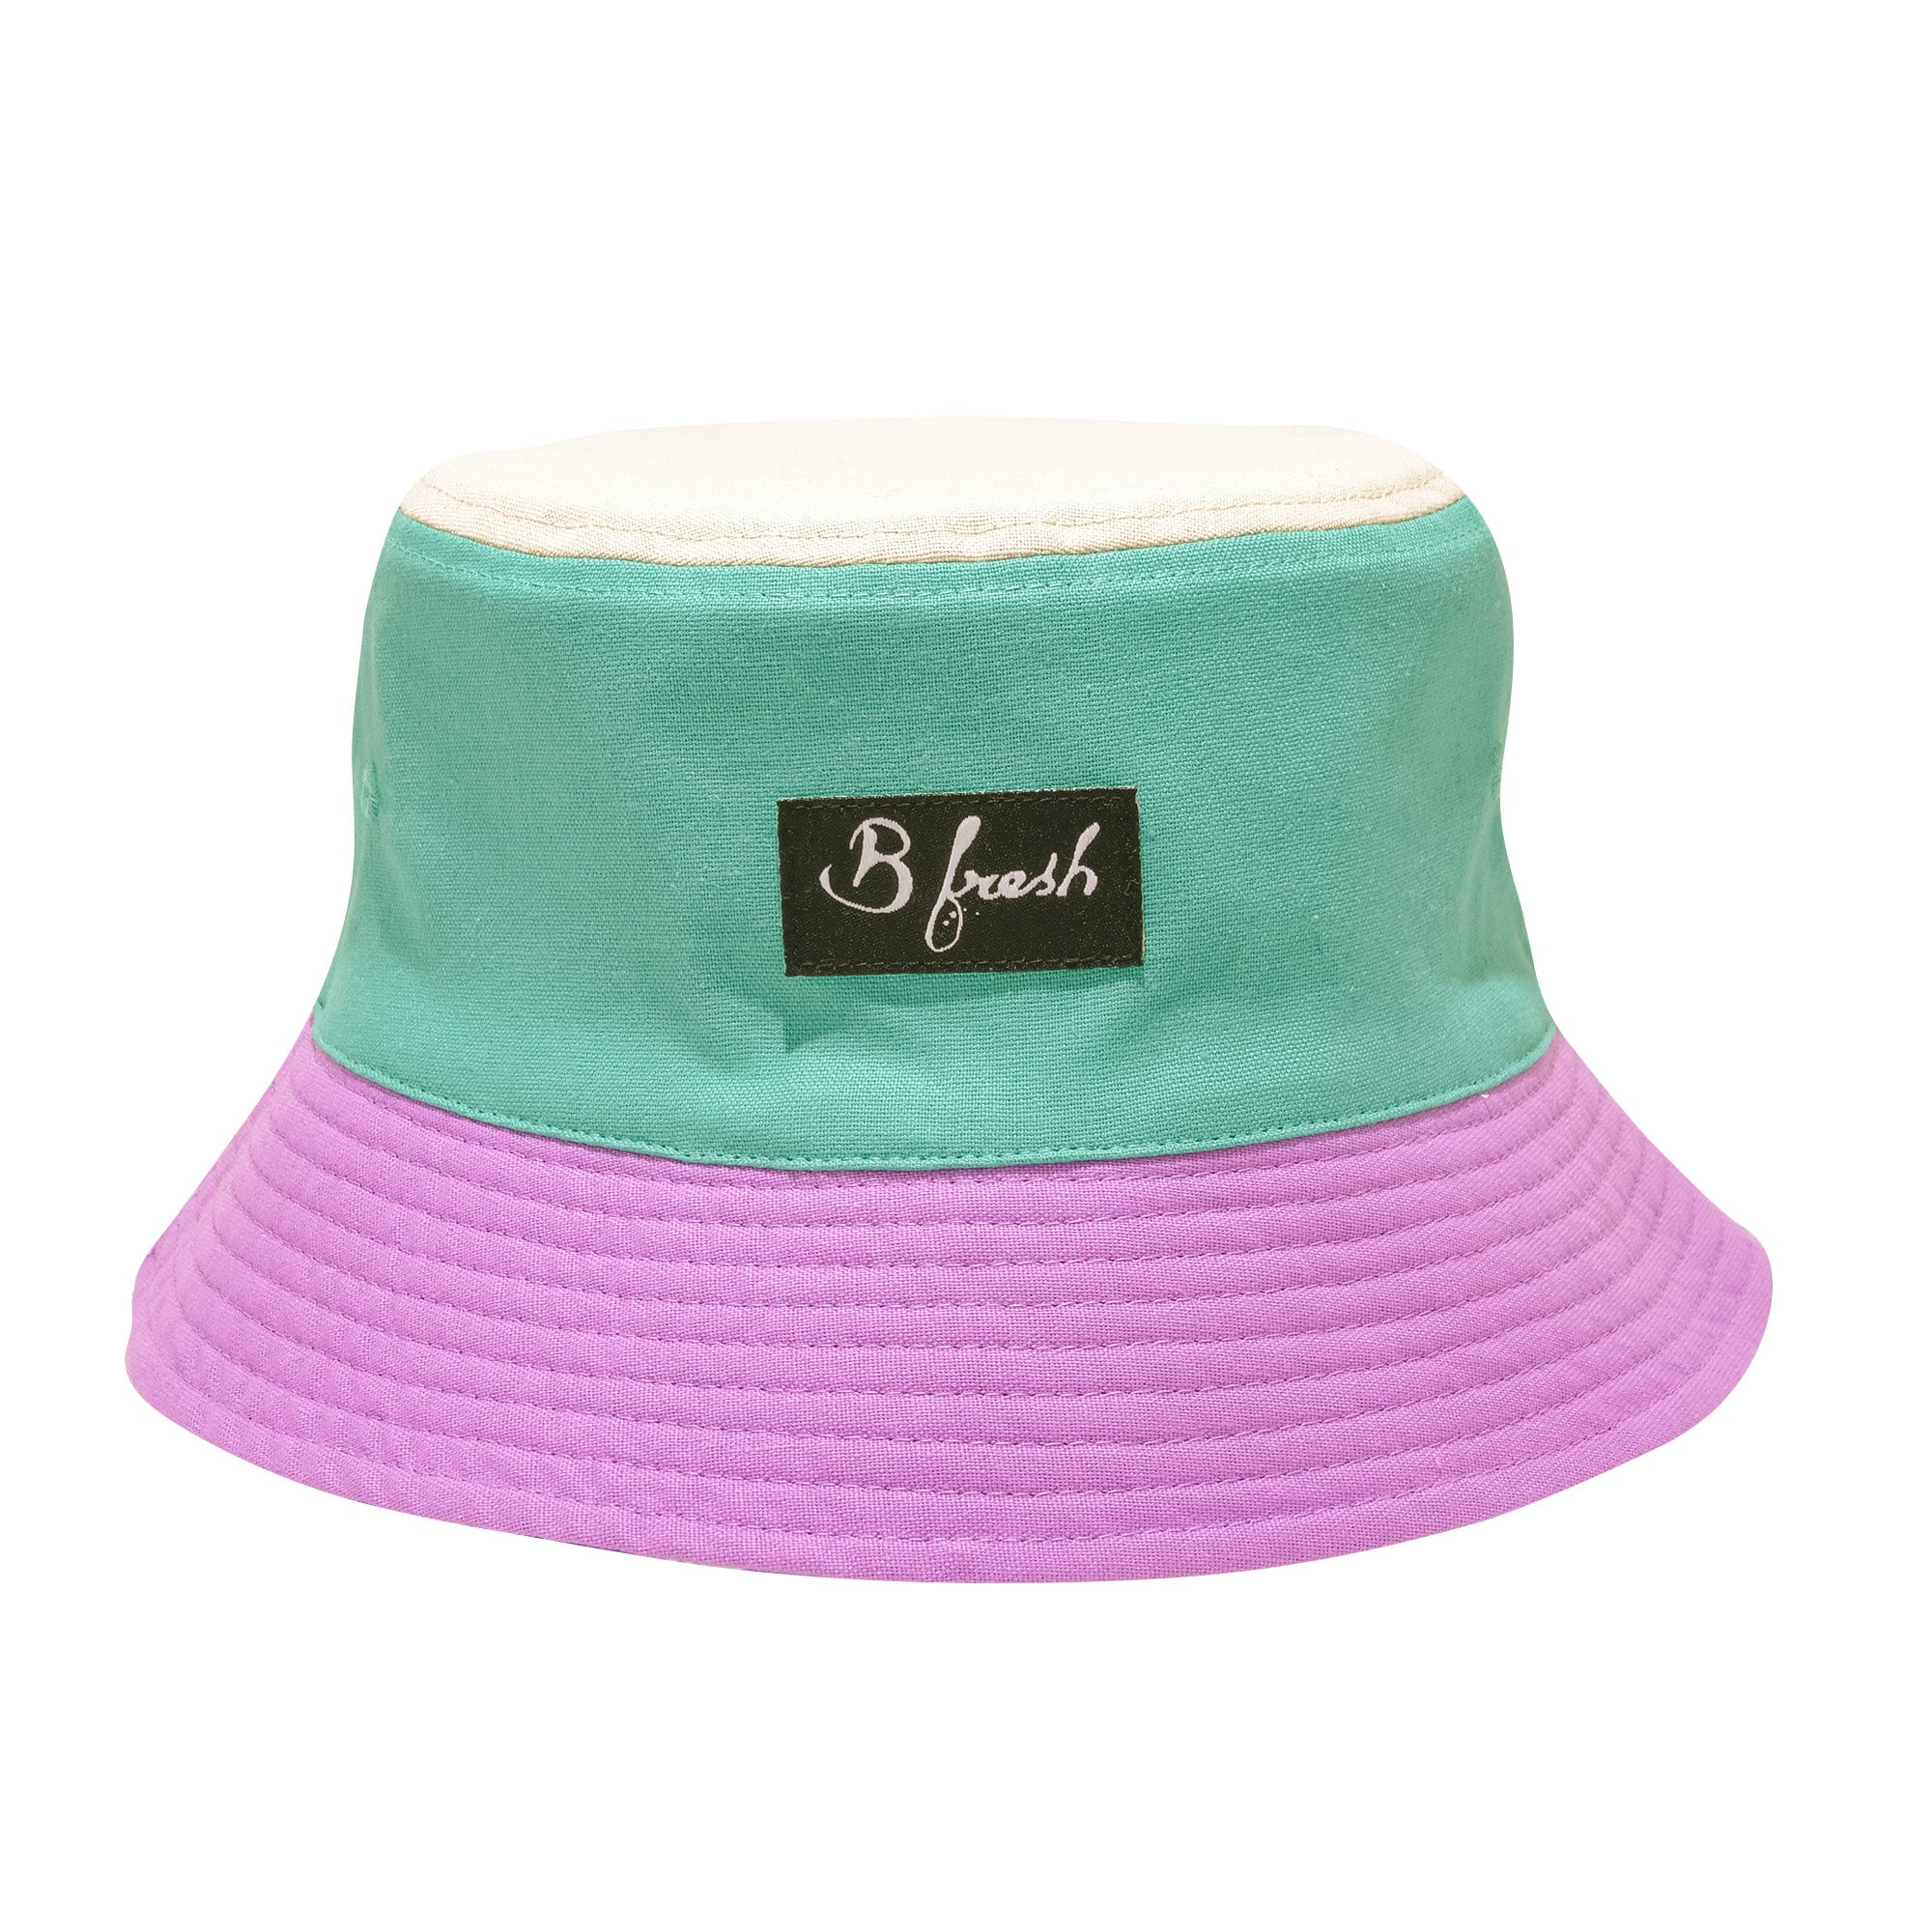 Hype Beach - Reversible Bucket Hat